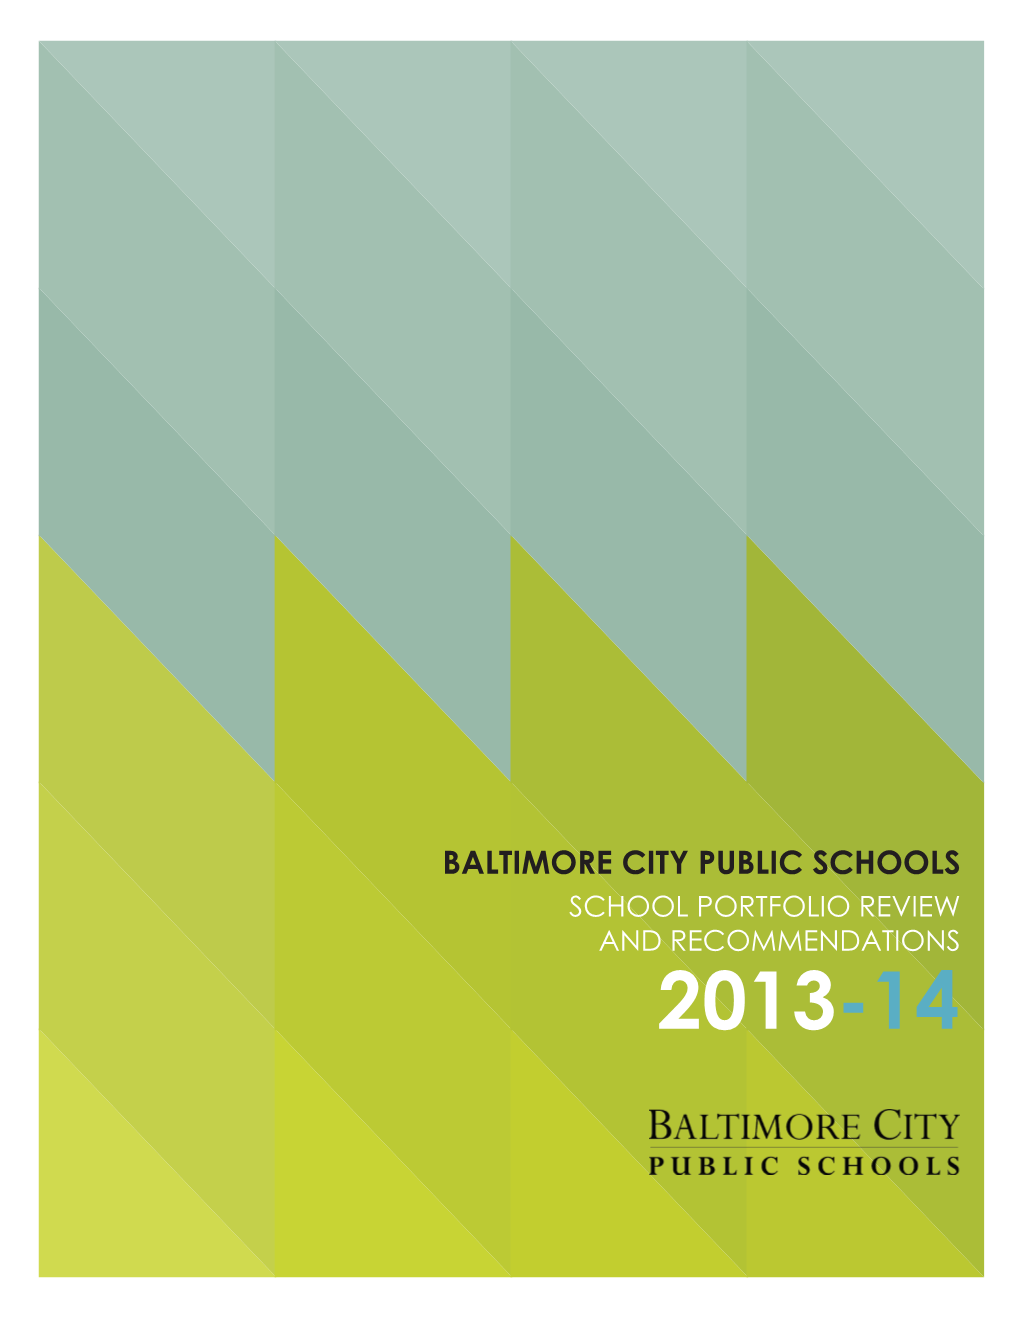 Baltimore City Public Schools School Portfolio Review and Recommendations 2013-14